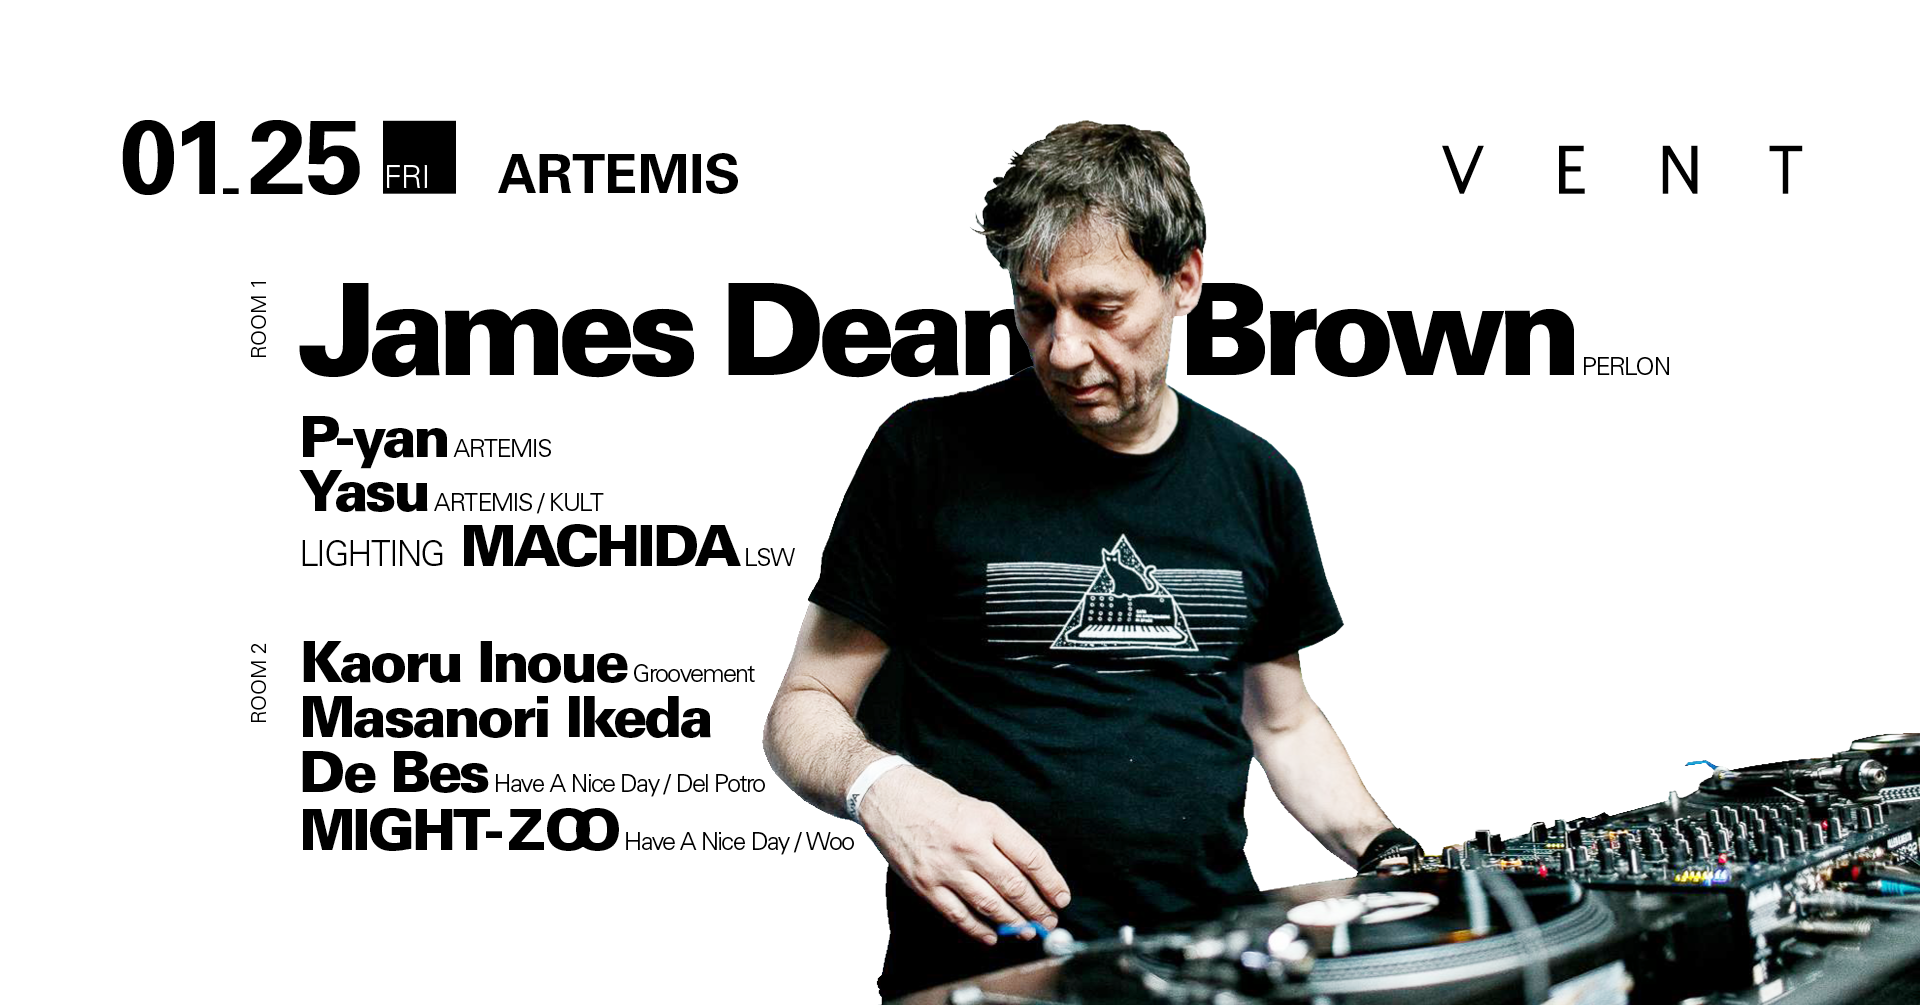 James Dean Brown at ARTEMIS